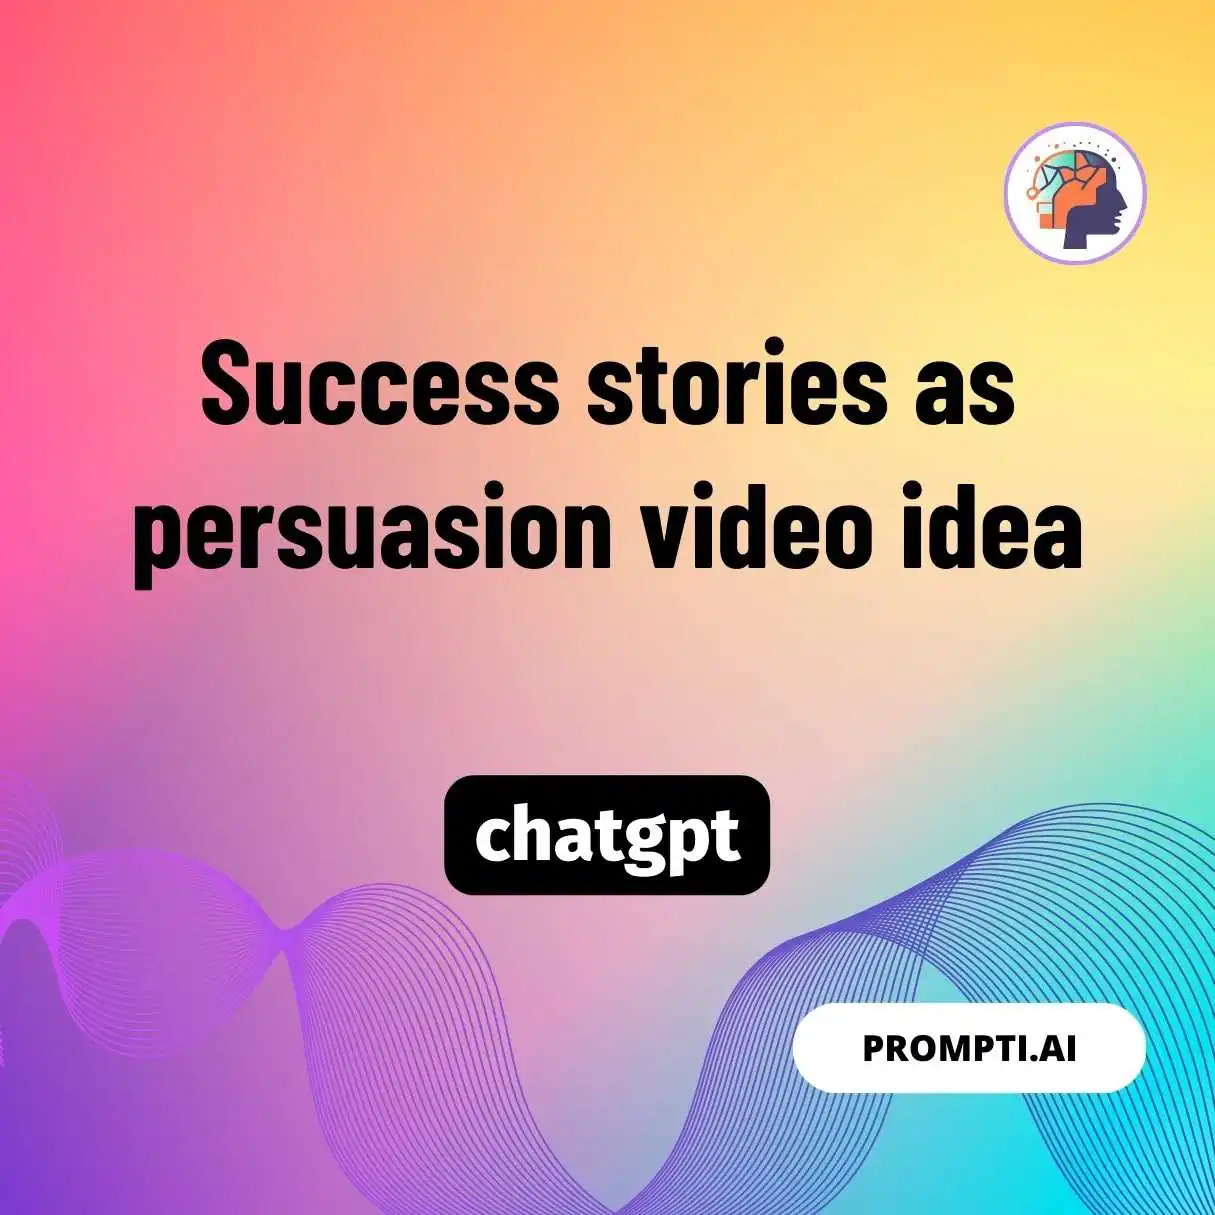 Success stories as persuasion video idea